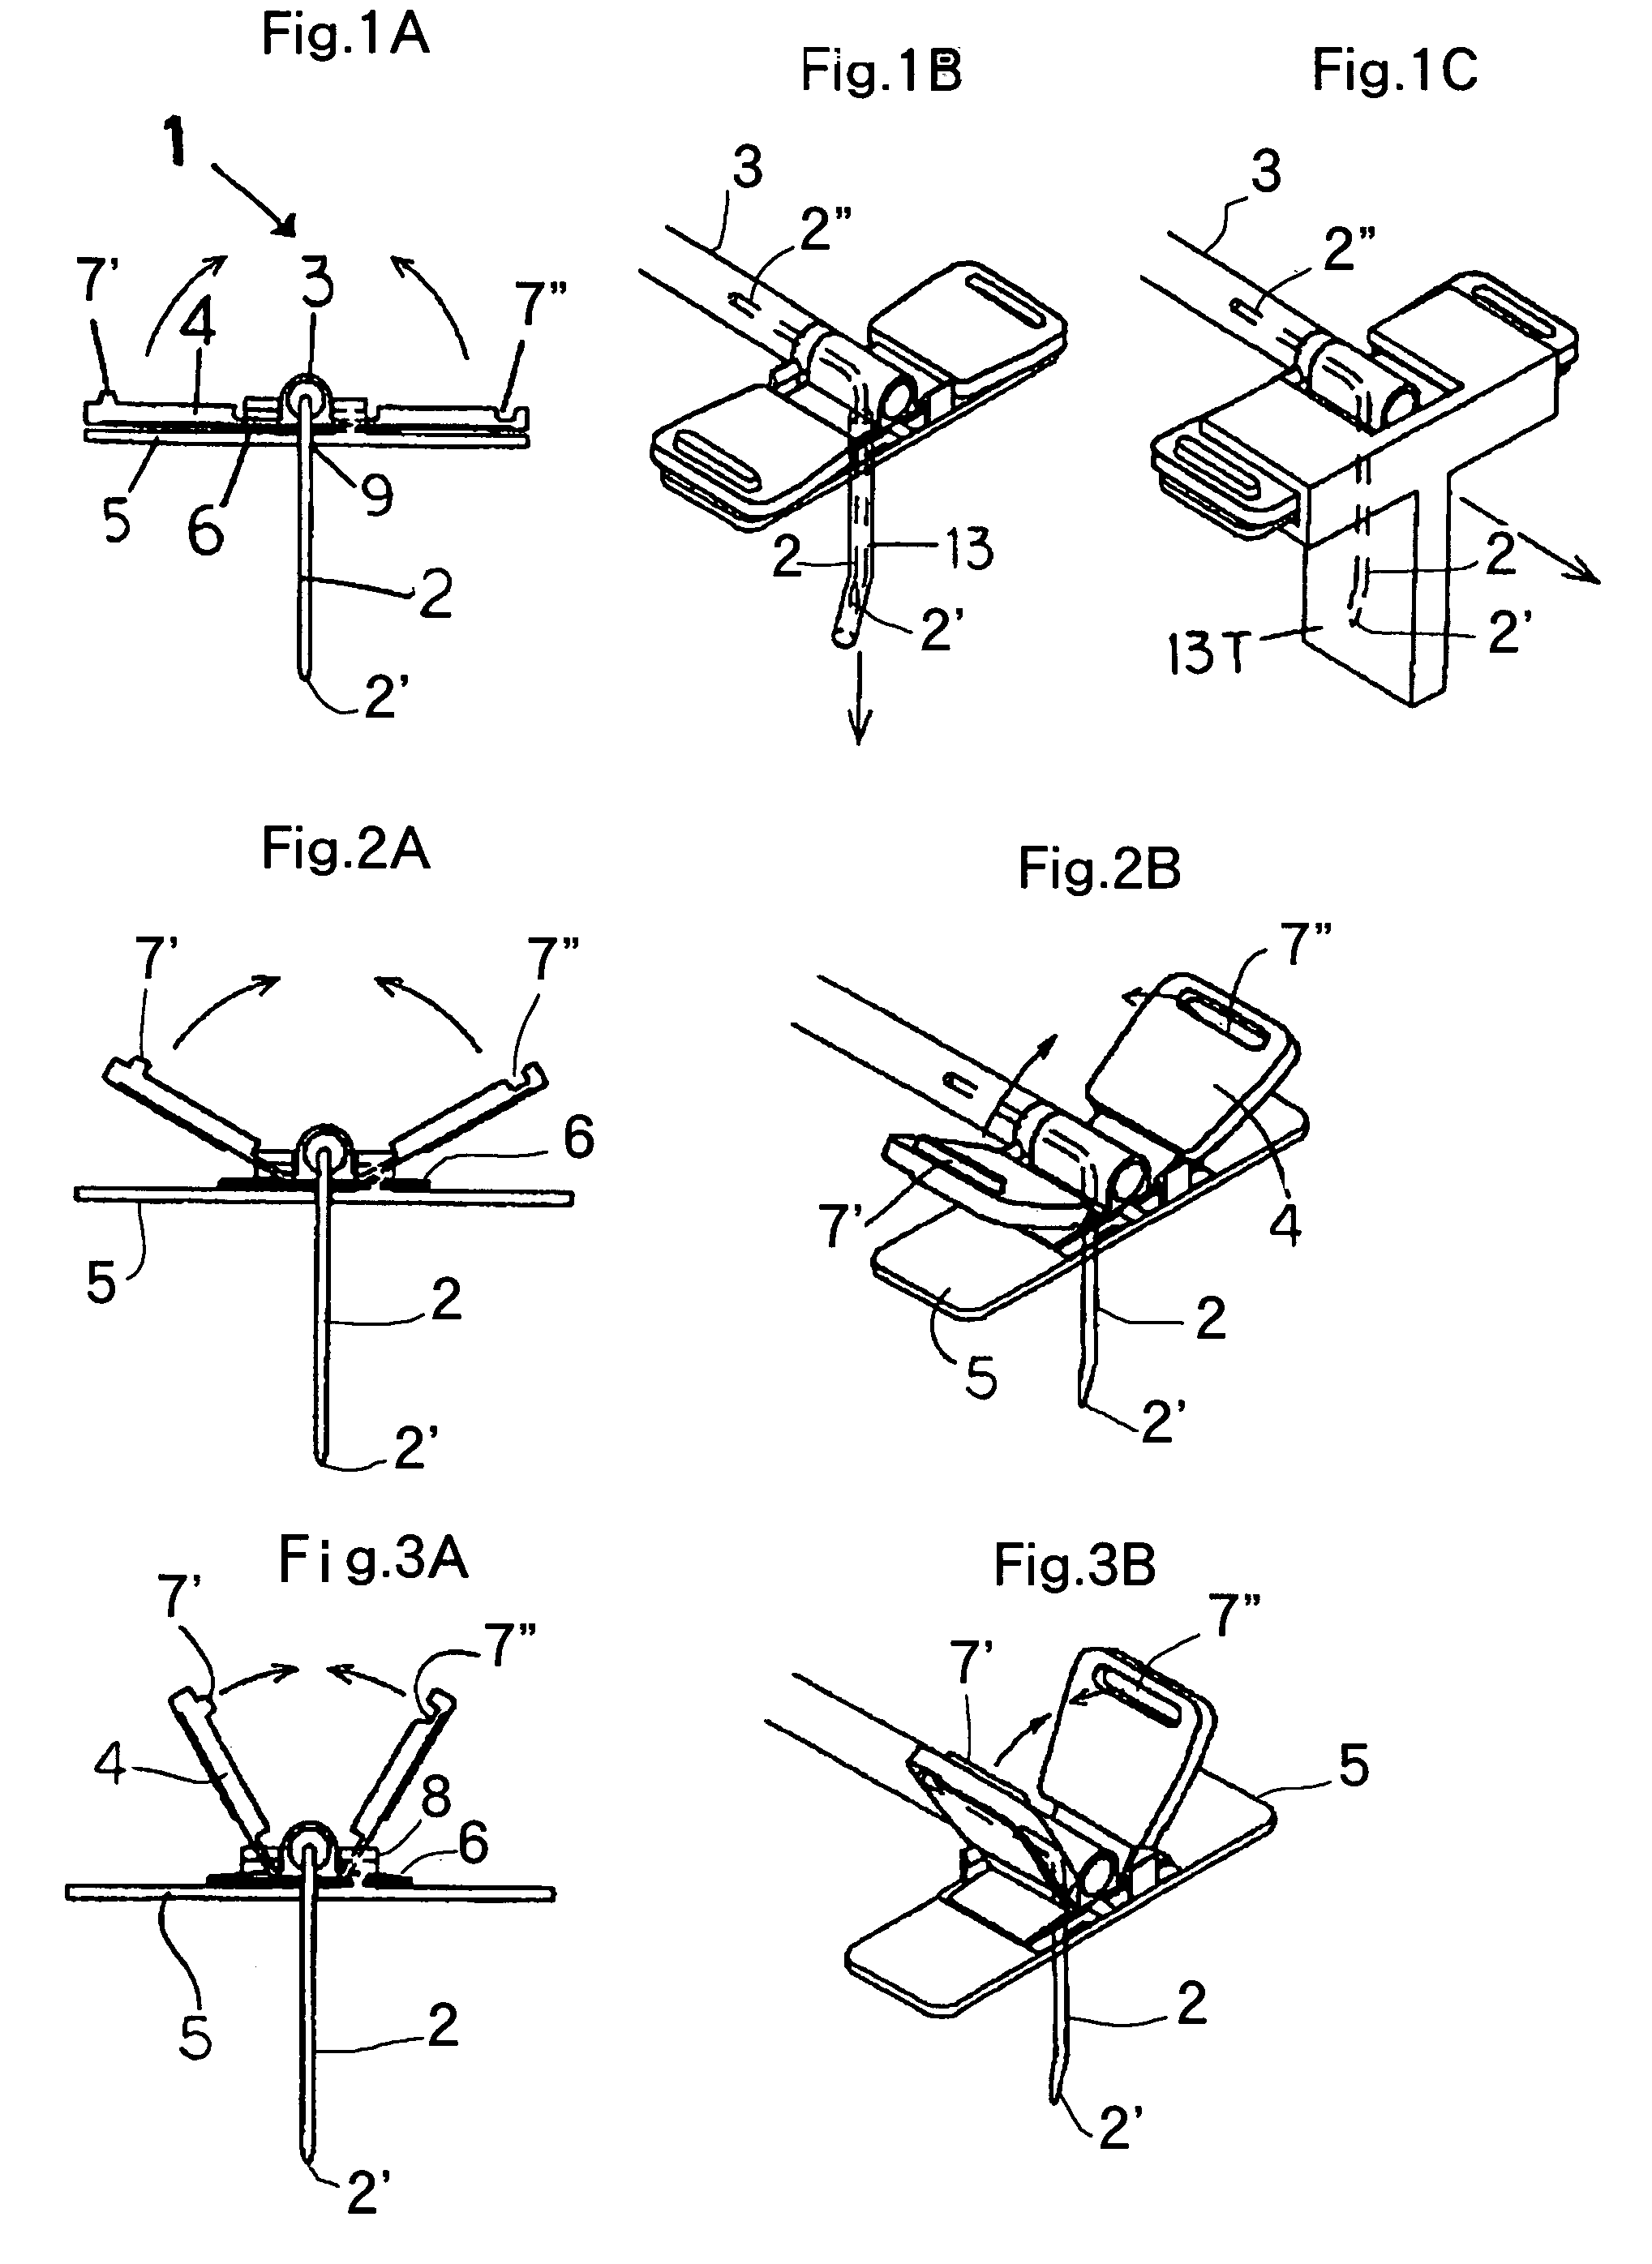 Winged angled needle assembly